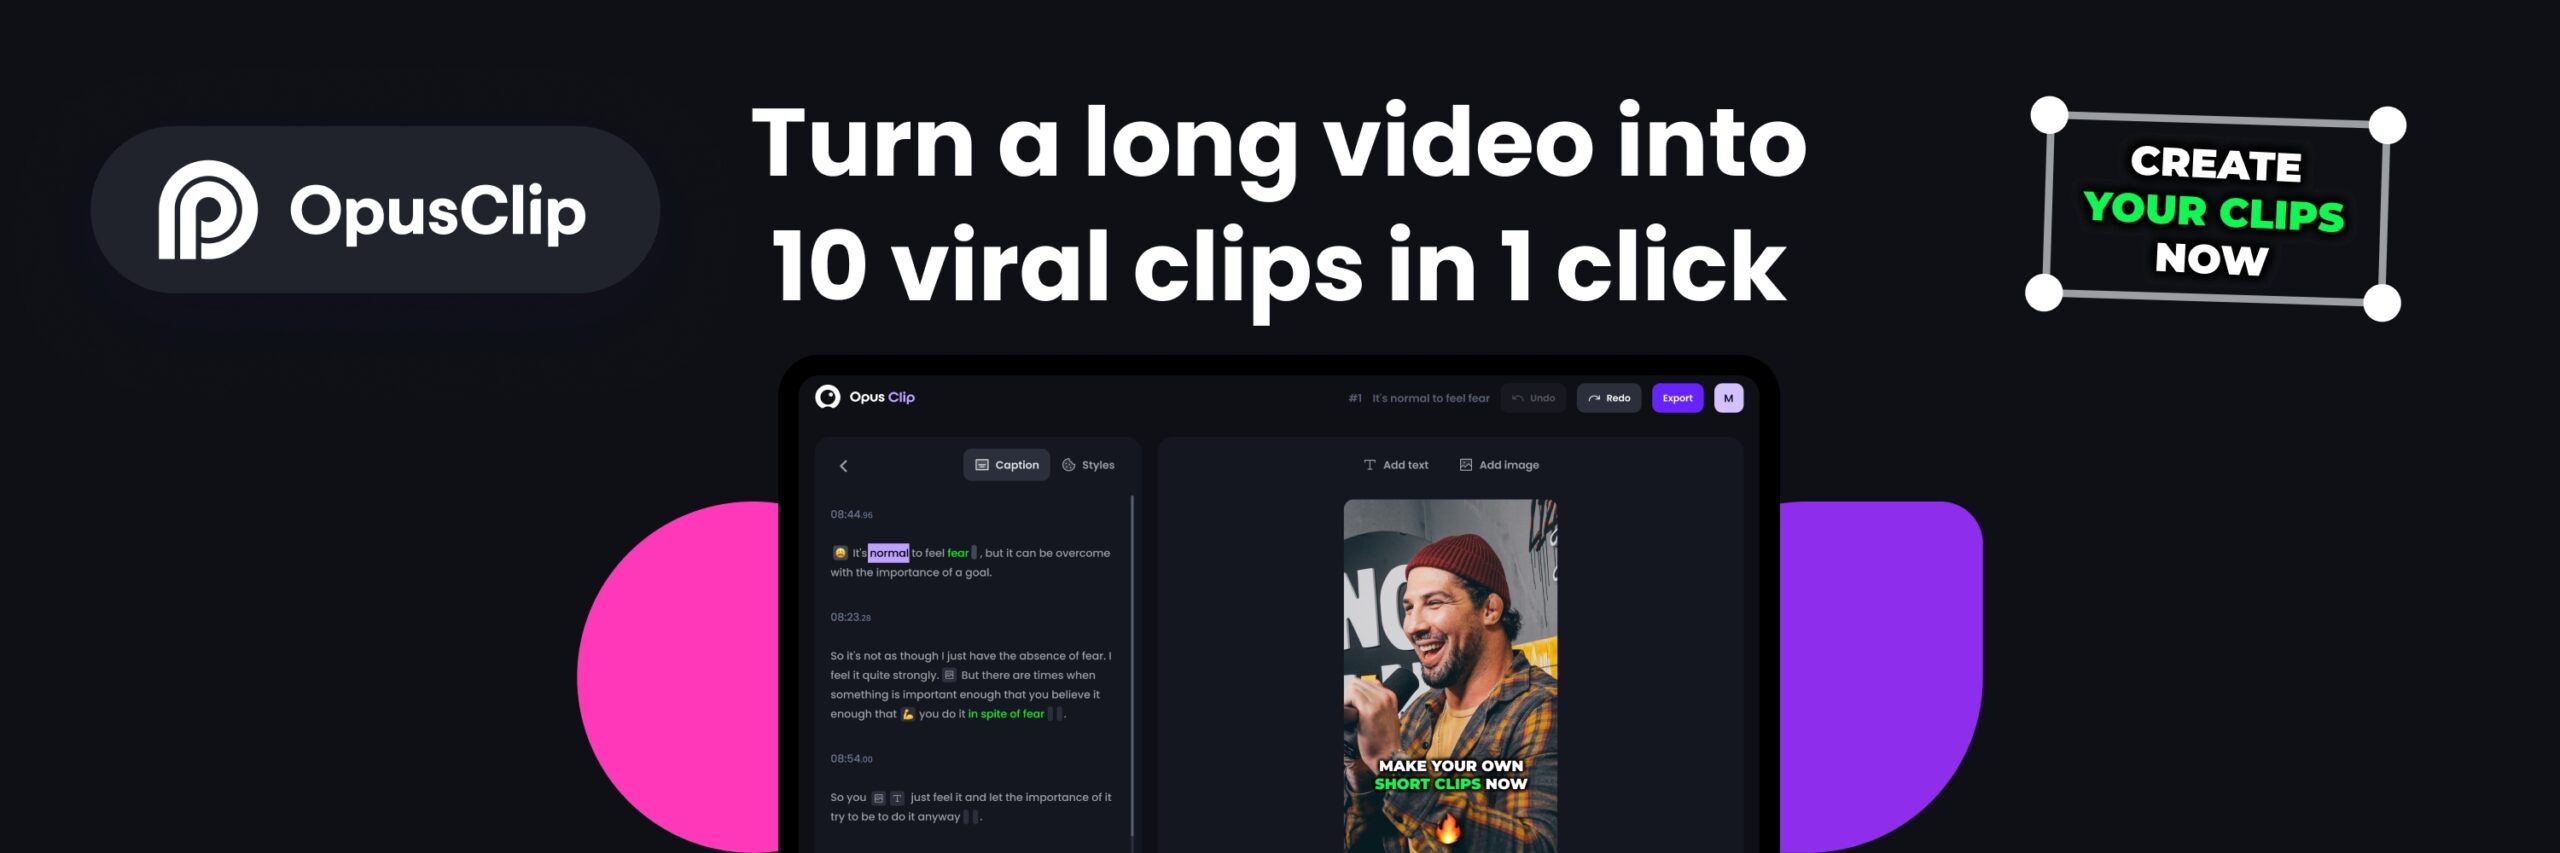 Viral Video Editing Tools - Opus Clip